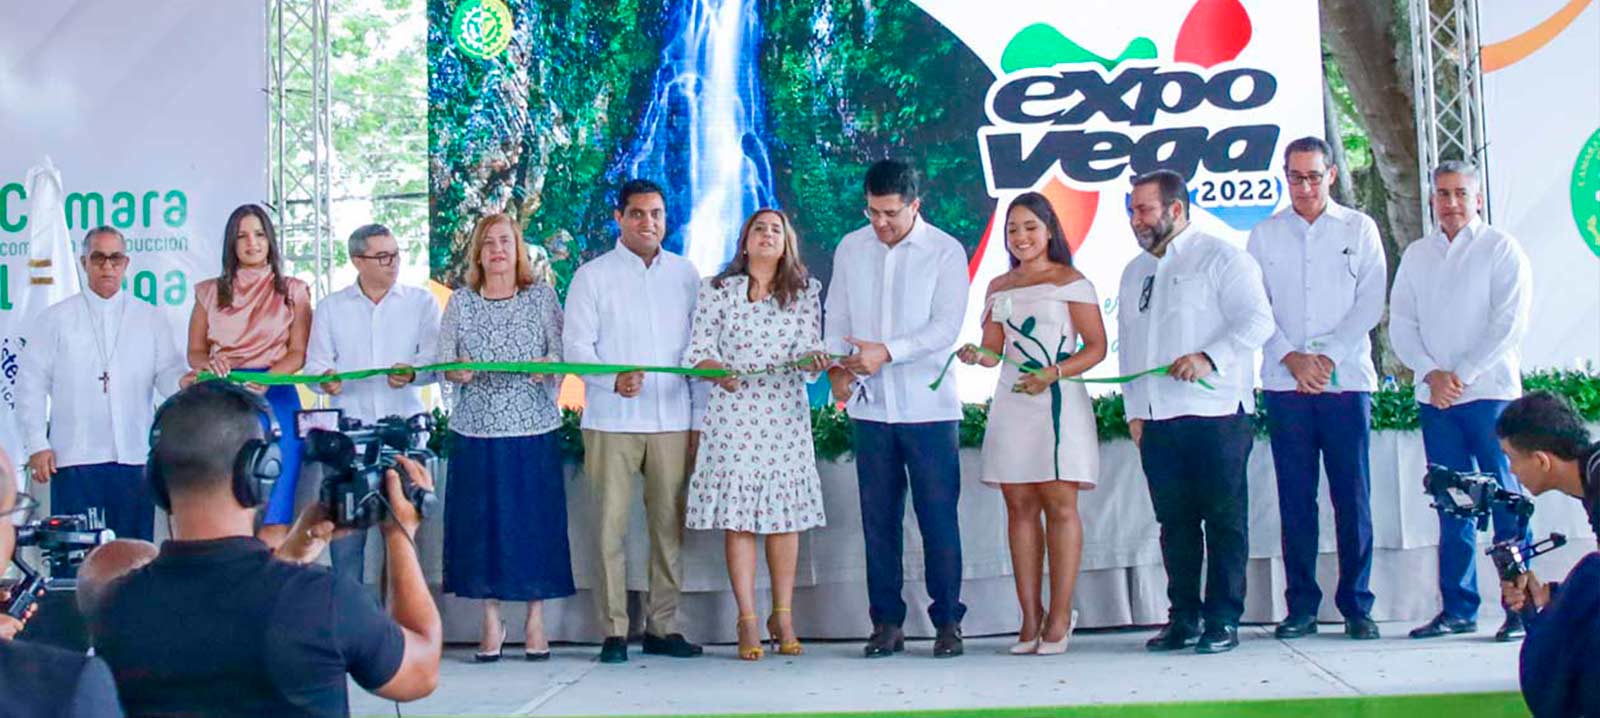 Expo Vega Real 2022 inicia con  participación estelar del ministro de  Turismo David Collado